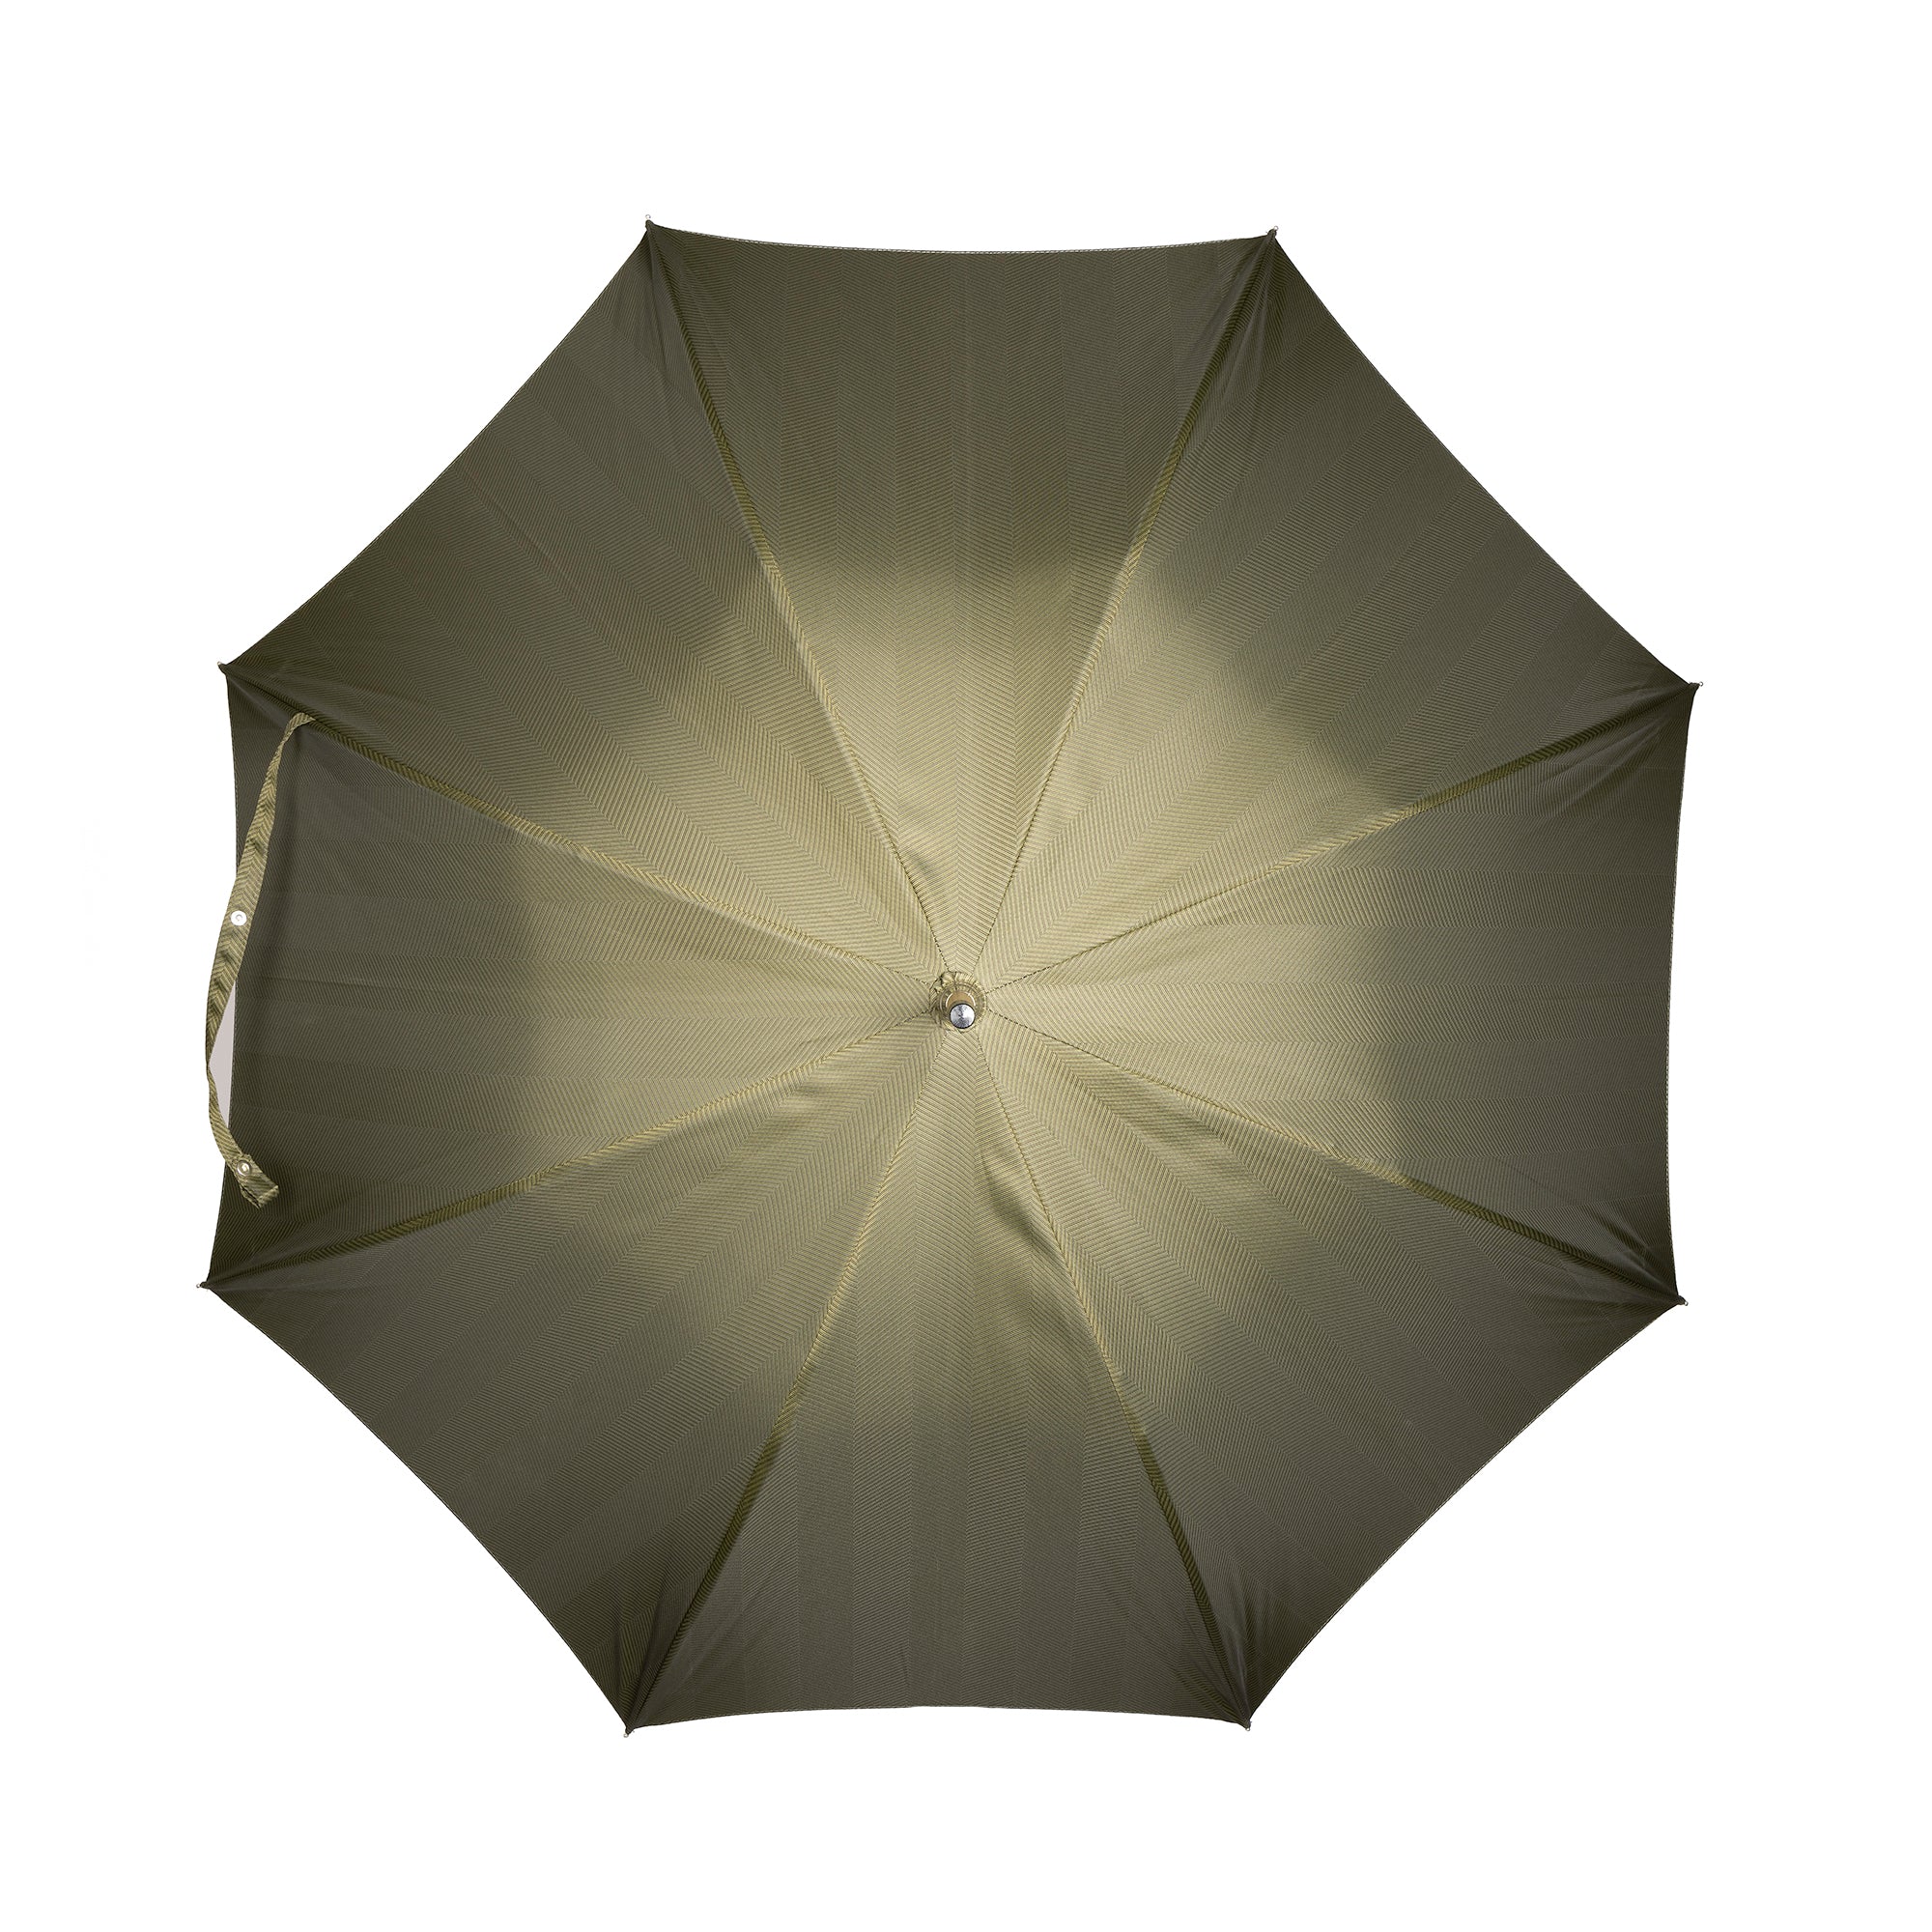 Umbrella with Chestnut Handle